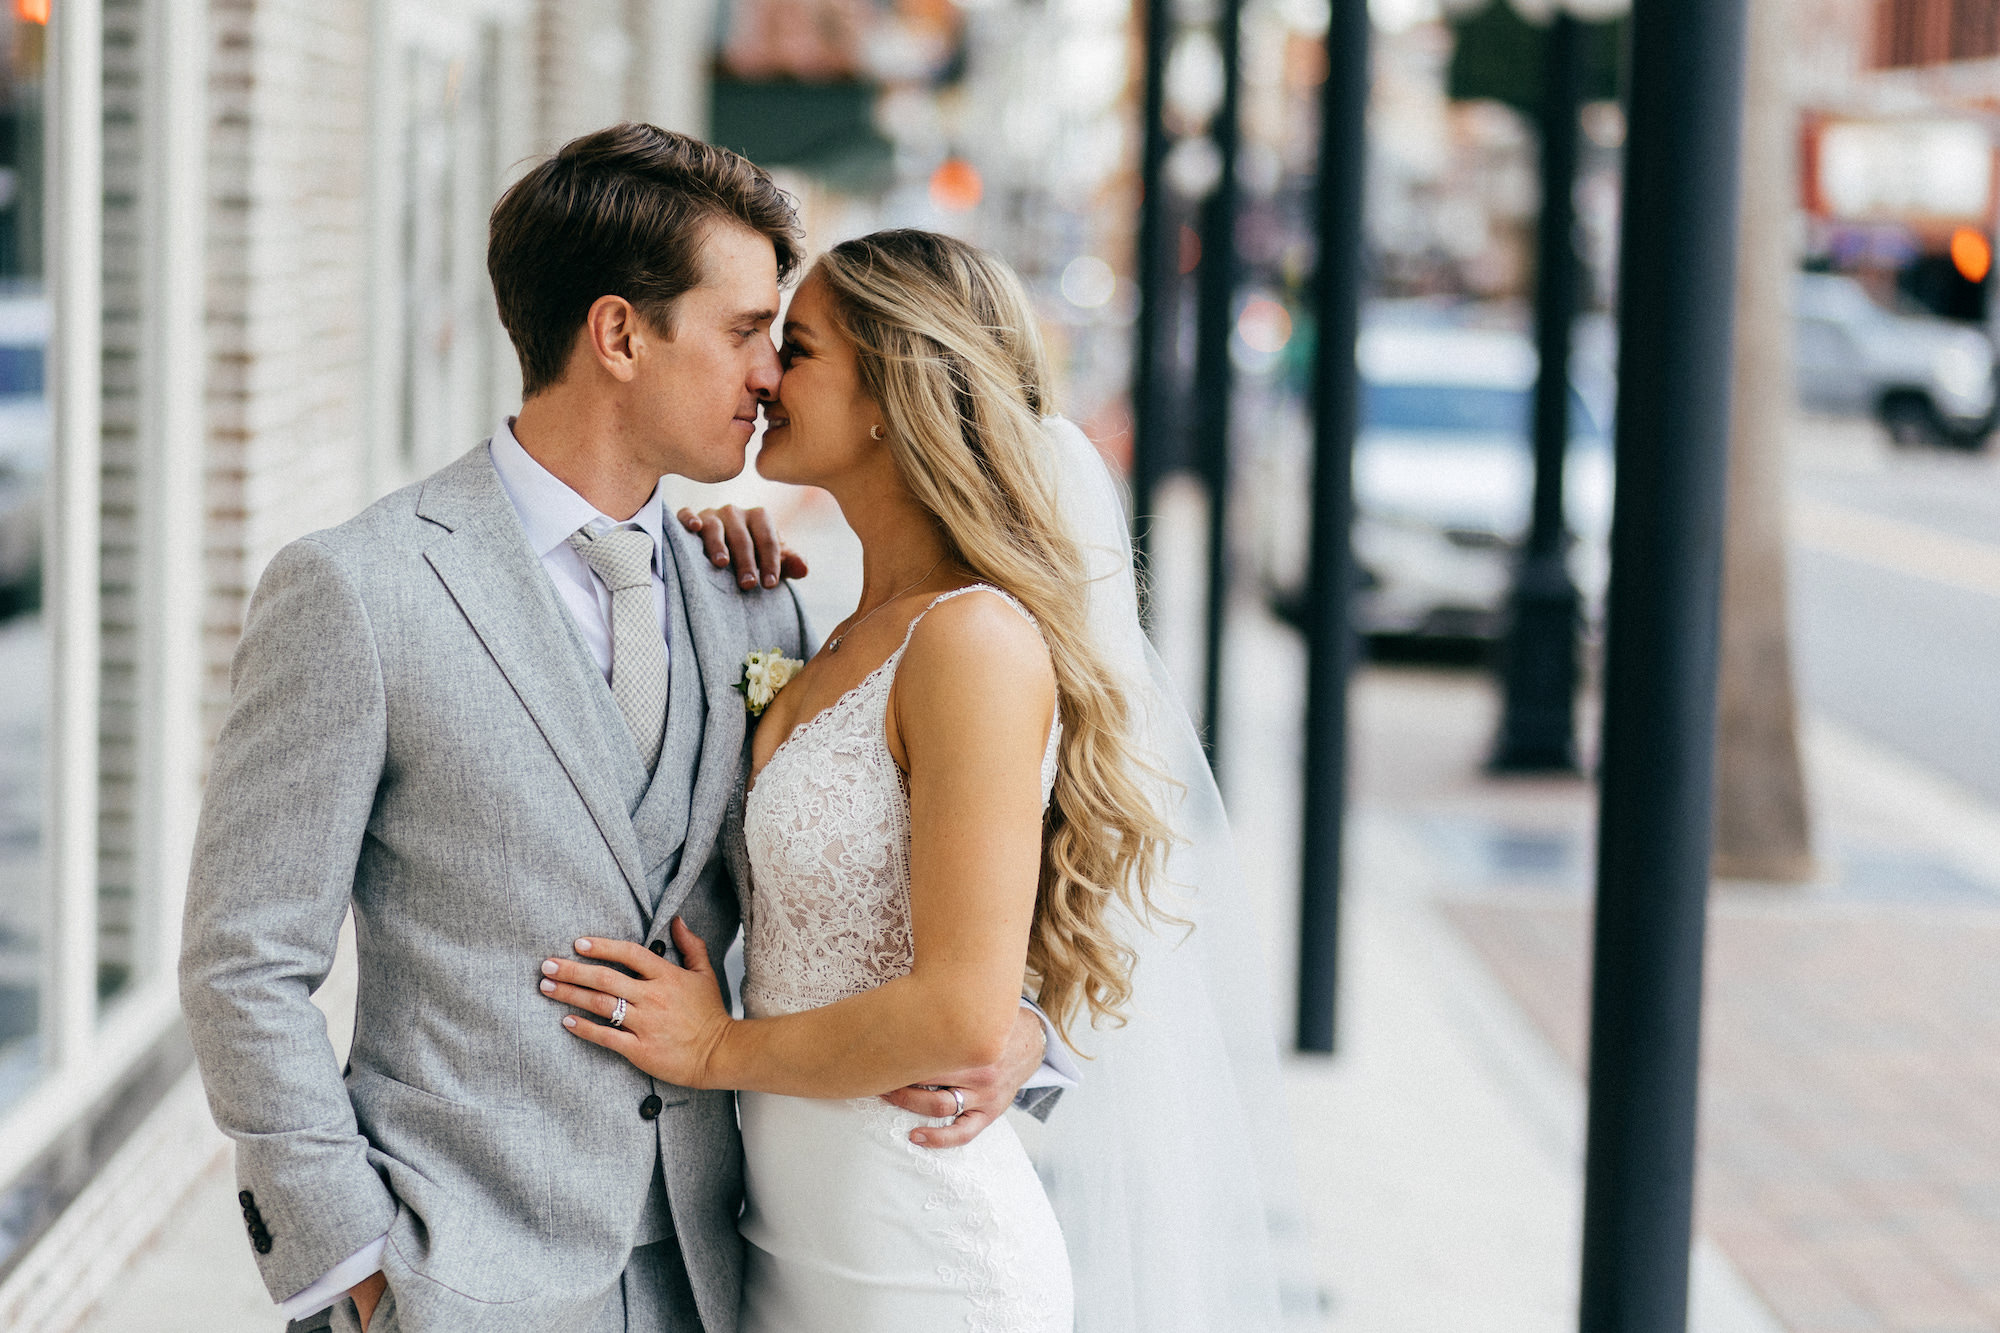 Tampa Bay Bride and Groom in Historic Ybor City, Light Gray Suit, Luna Novias Lace Overlay Wedding Dress